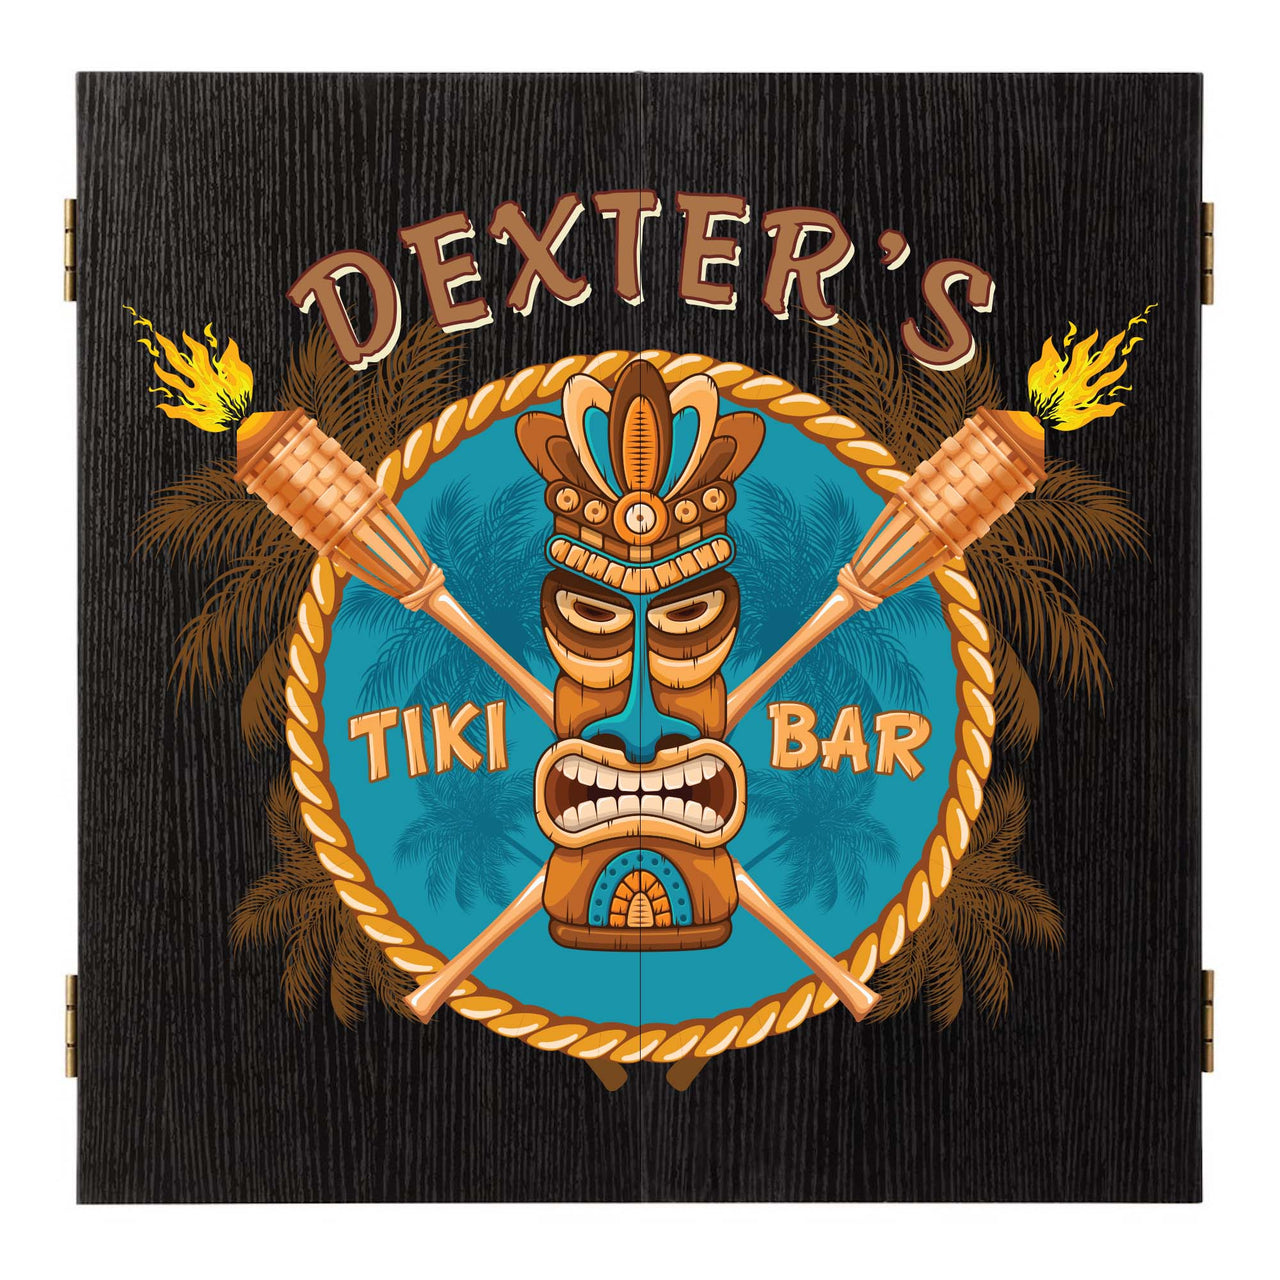 lovely dartboard cabinet for a Tiki bar